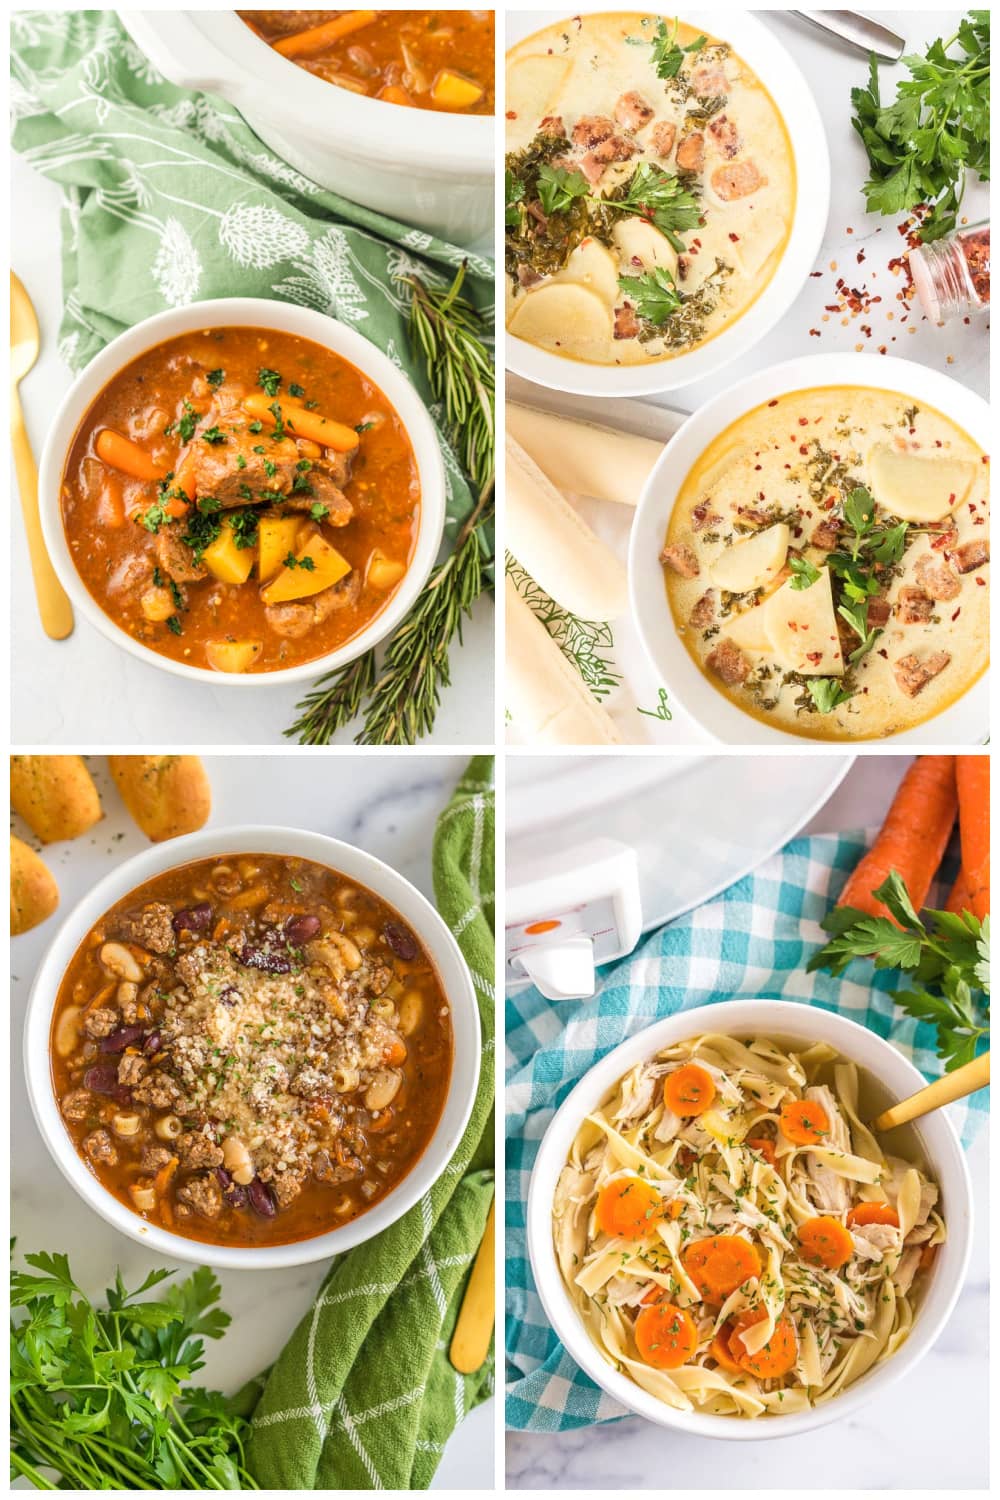 https://www.favfamilyrecipes.com/wp-content/uploads/2022/10/Crockpot-Soup-Recipes.jpg